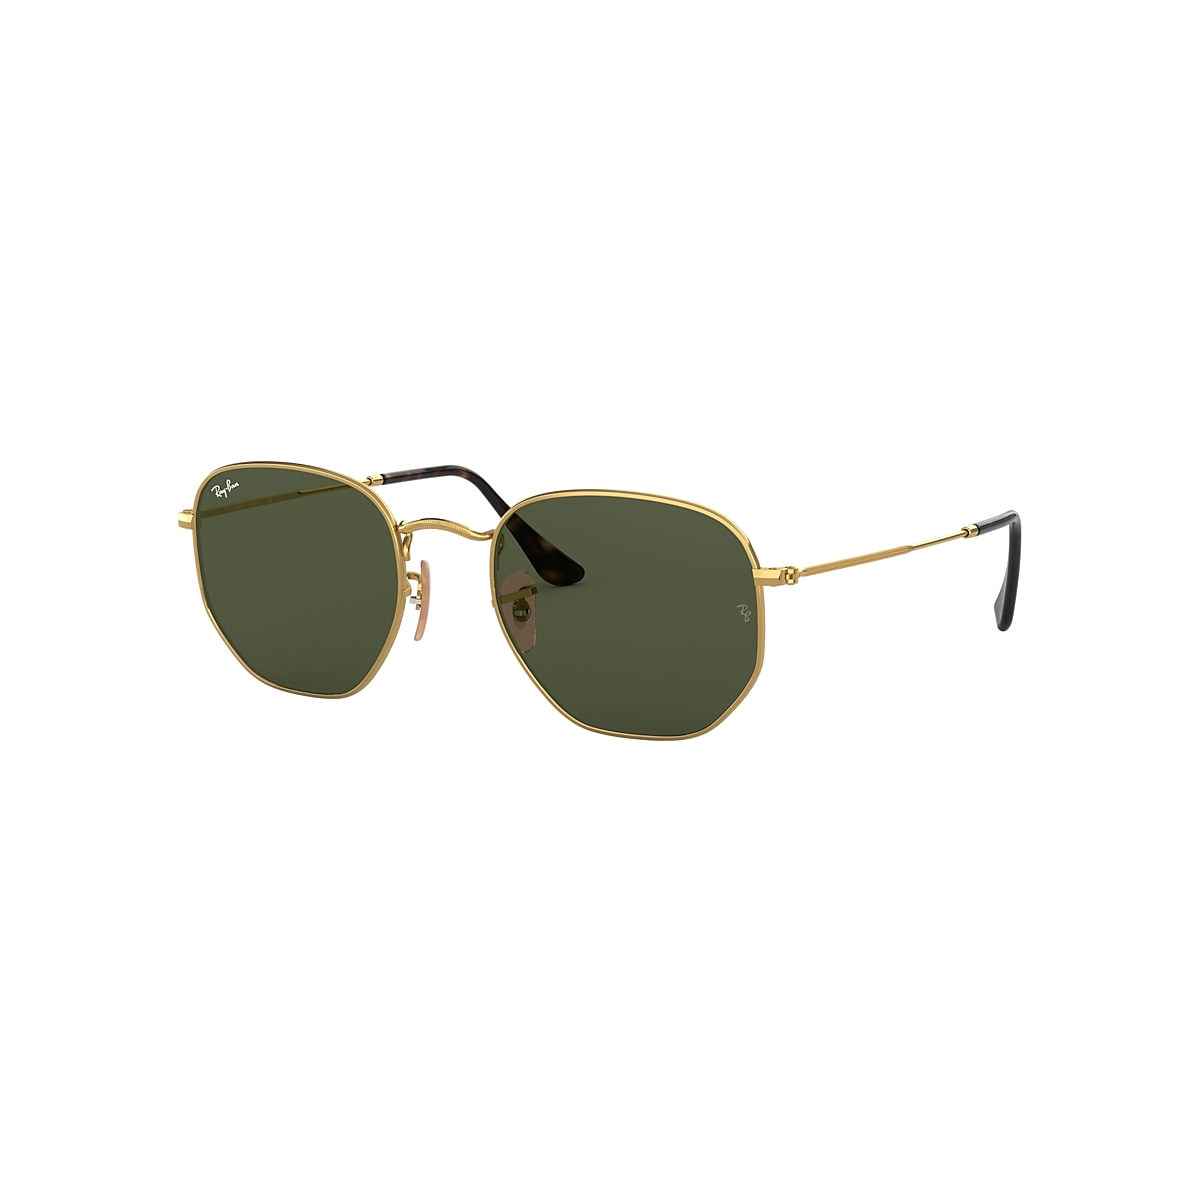 Kroniek Blauwdruk Toelating Hexagonal Flat Lenses Sunglasses in Gold and Green - RB3548N | Ray-Ban® US